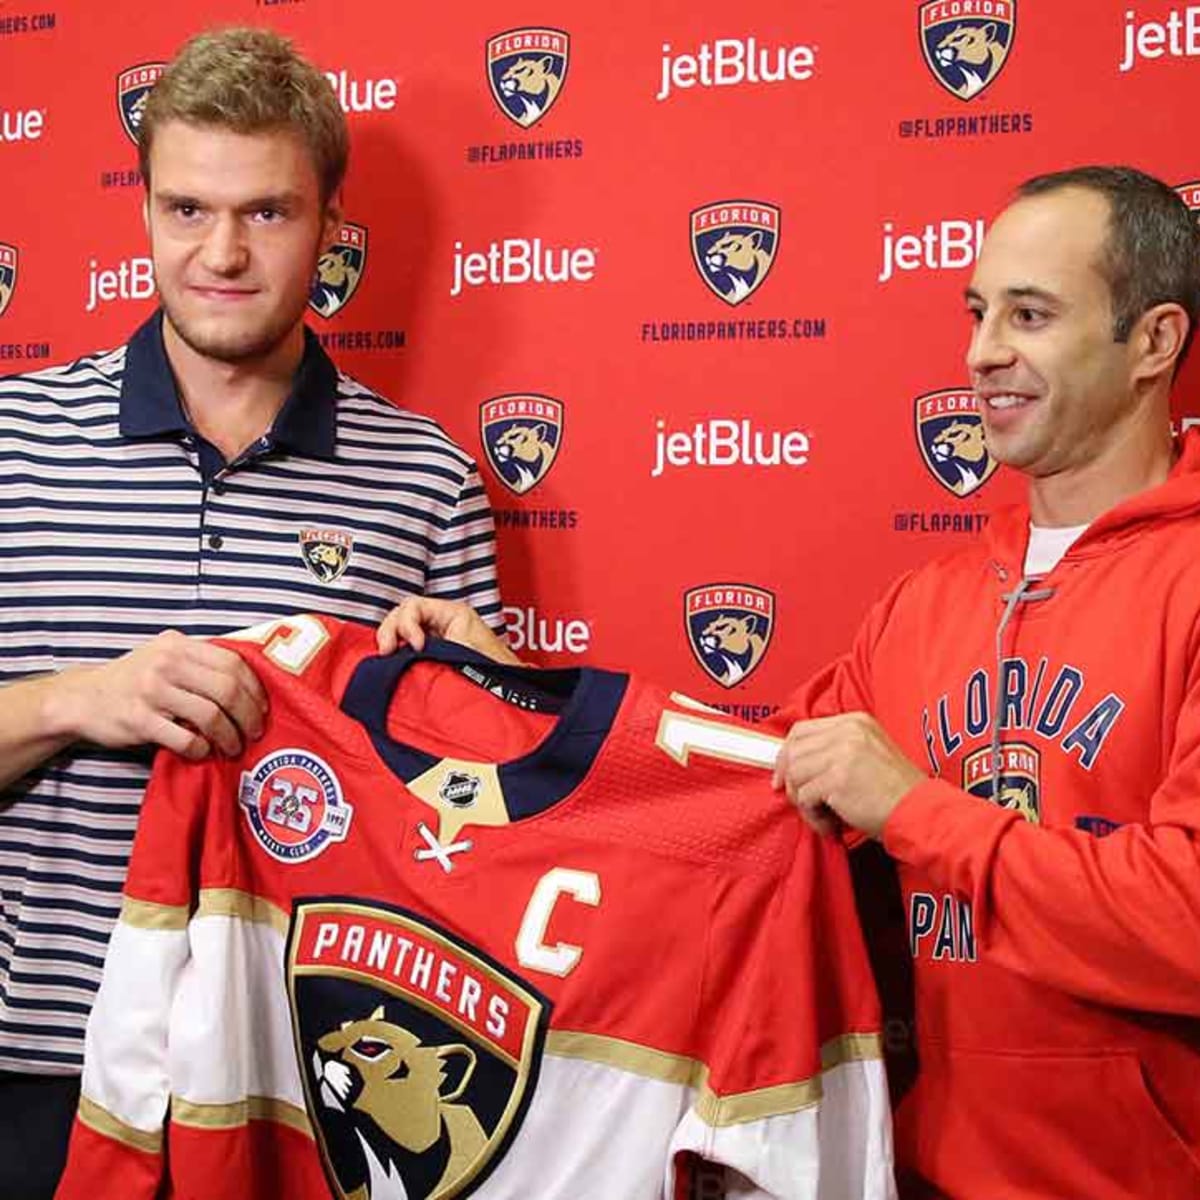 While preparing for NHL postseason, Panthers captain Aleksander